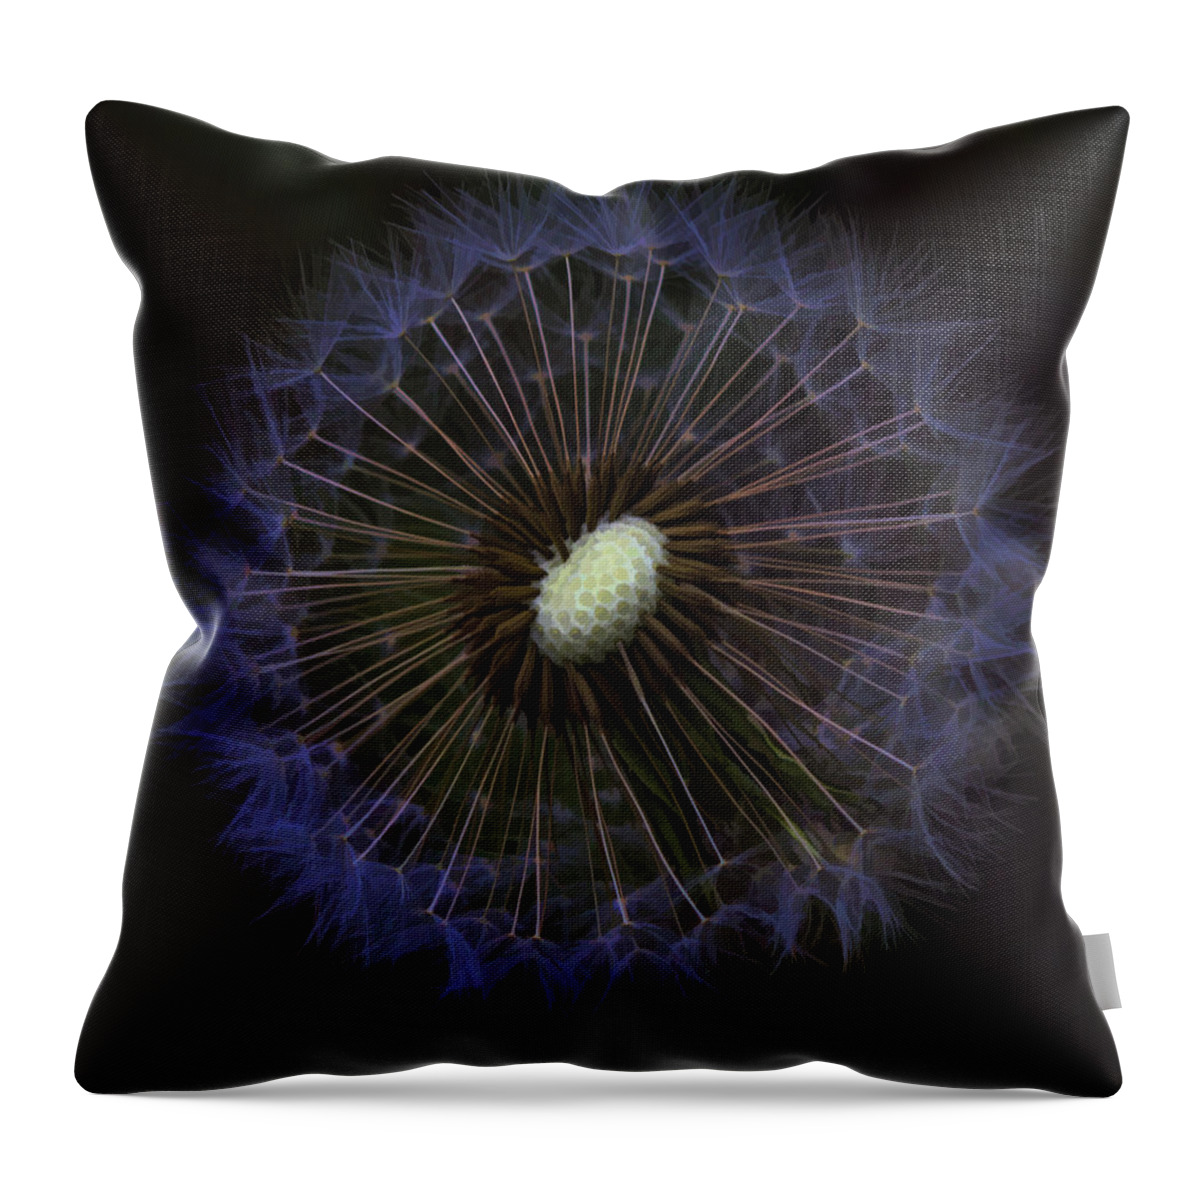 Dandelion Throw Pillow featuring the photograph Dandelion Nebula by Kathy Clark